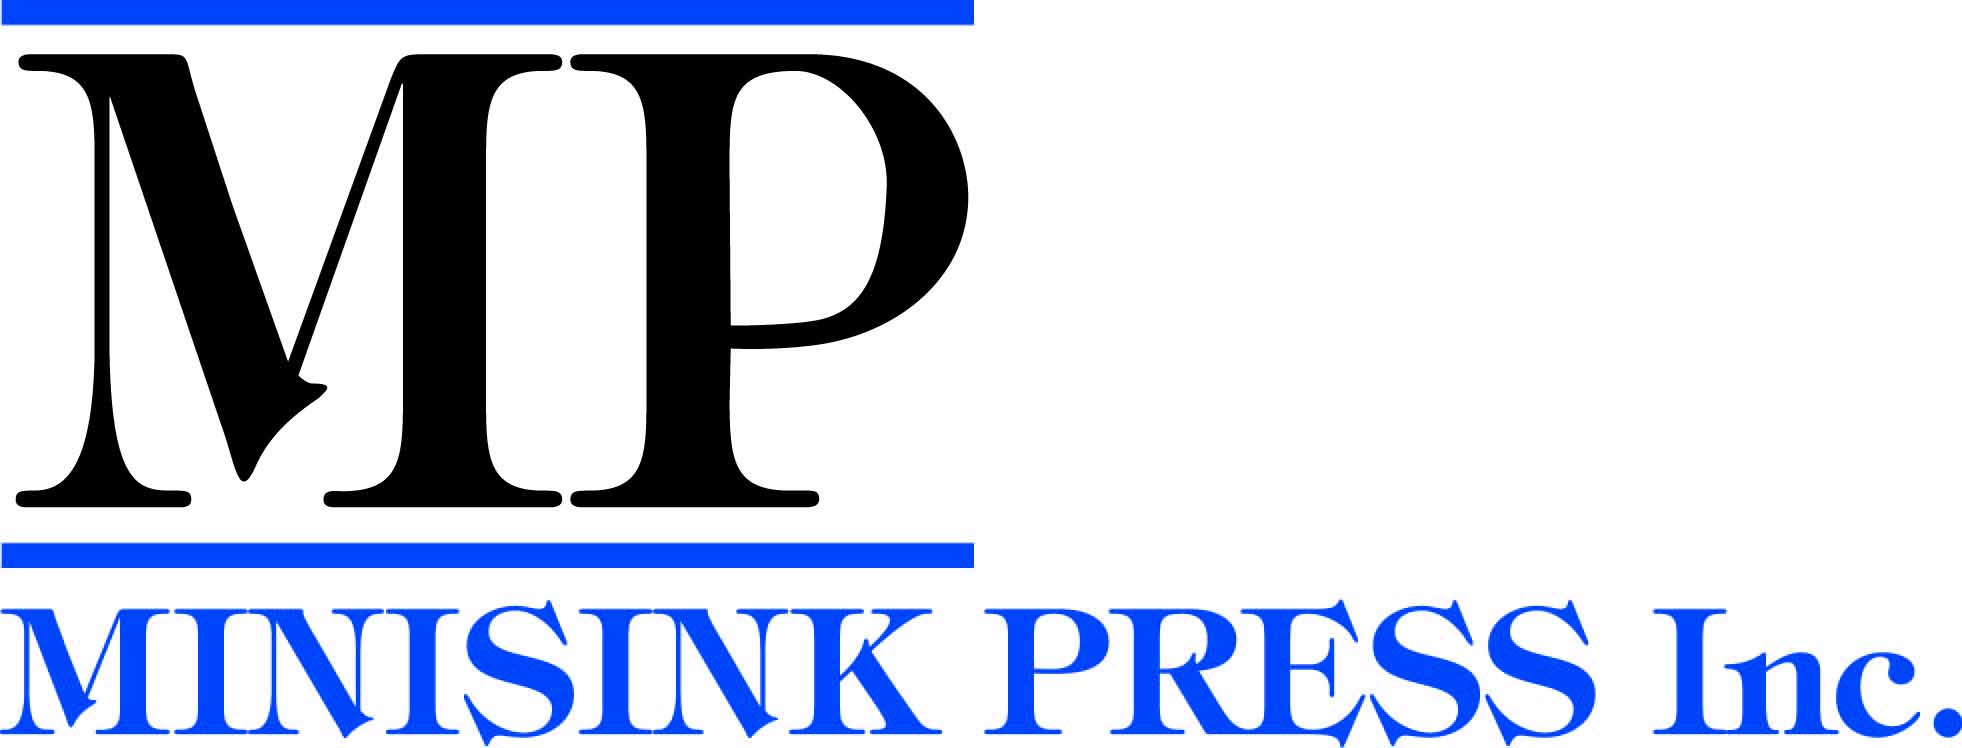 The Minisink Press logo